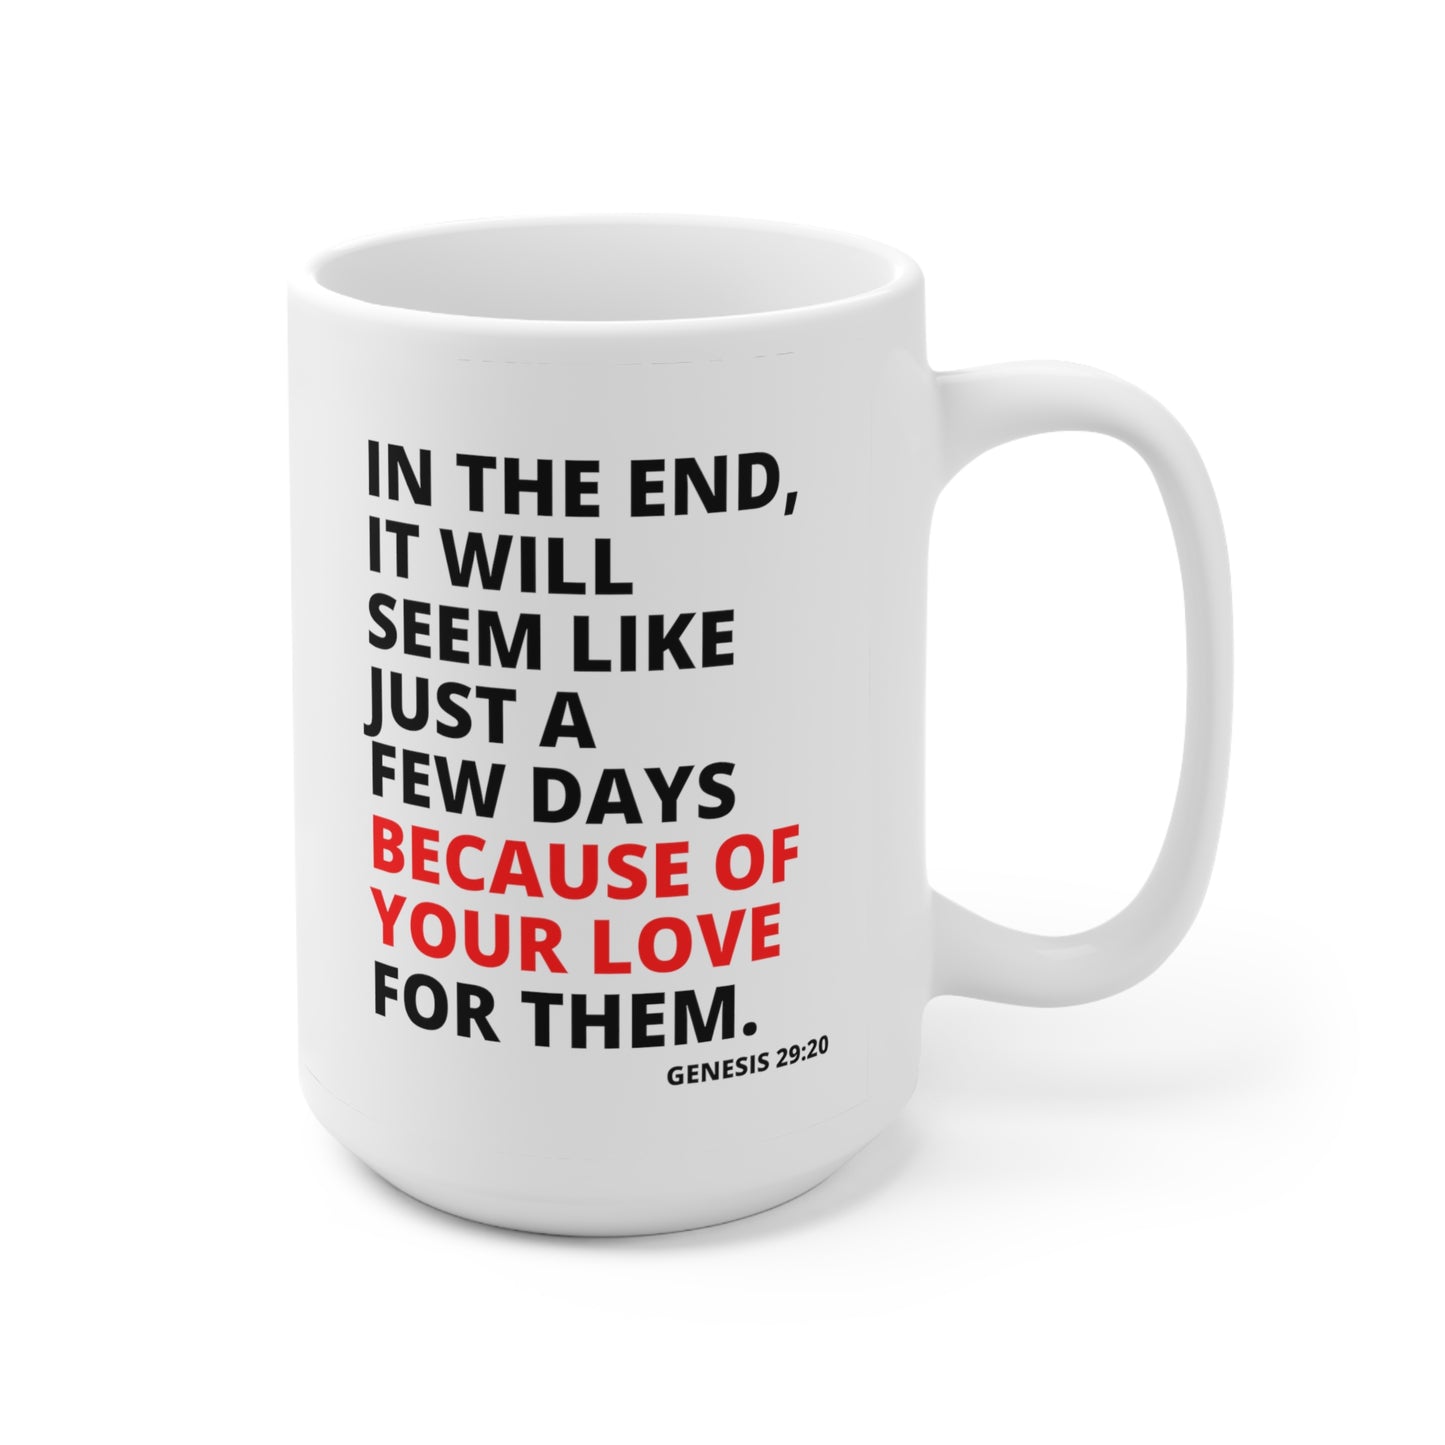 "Because of Your Love" Ceramic Mug